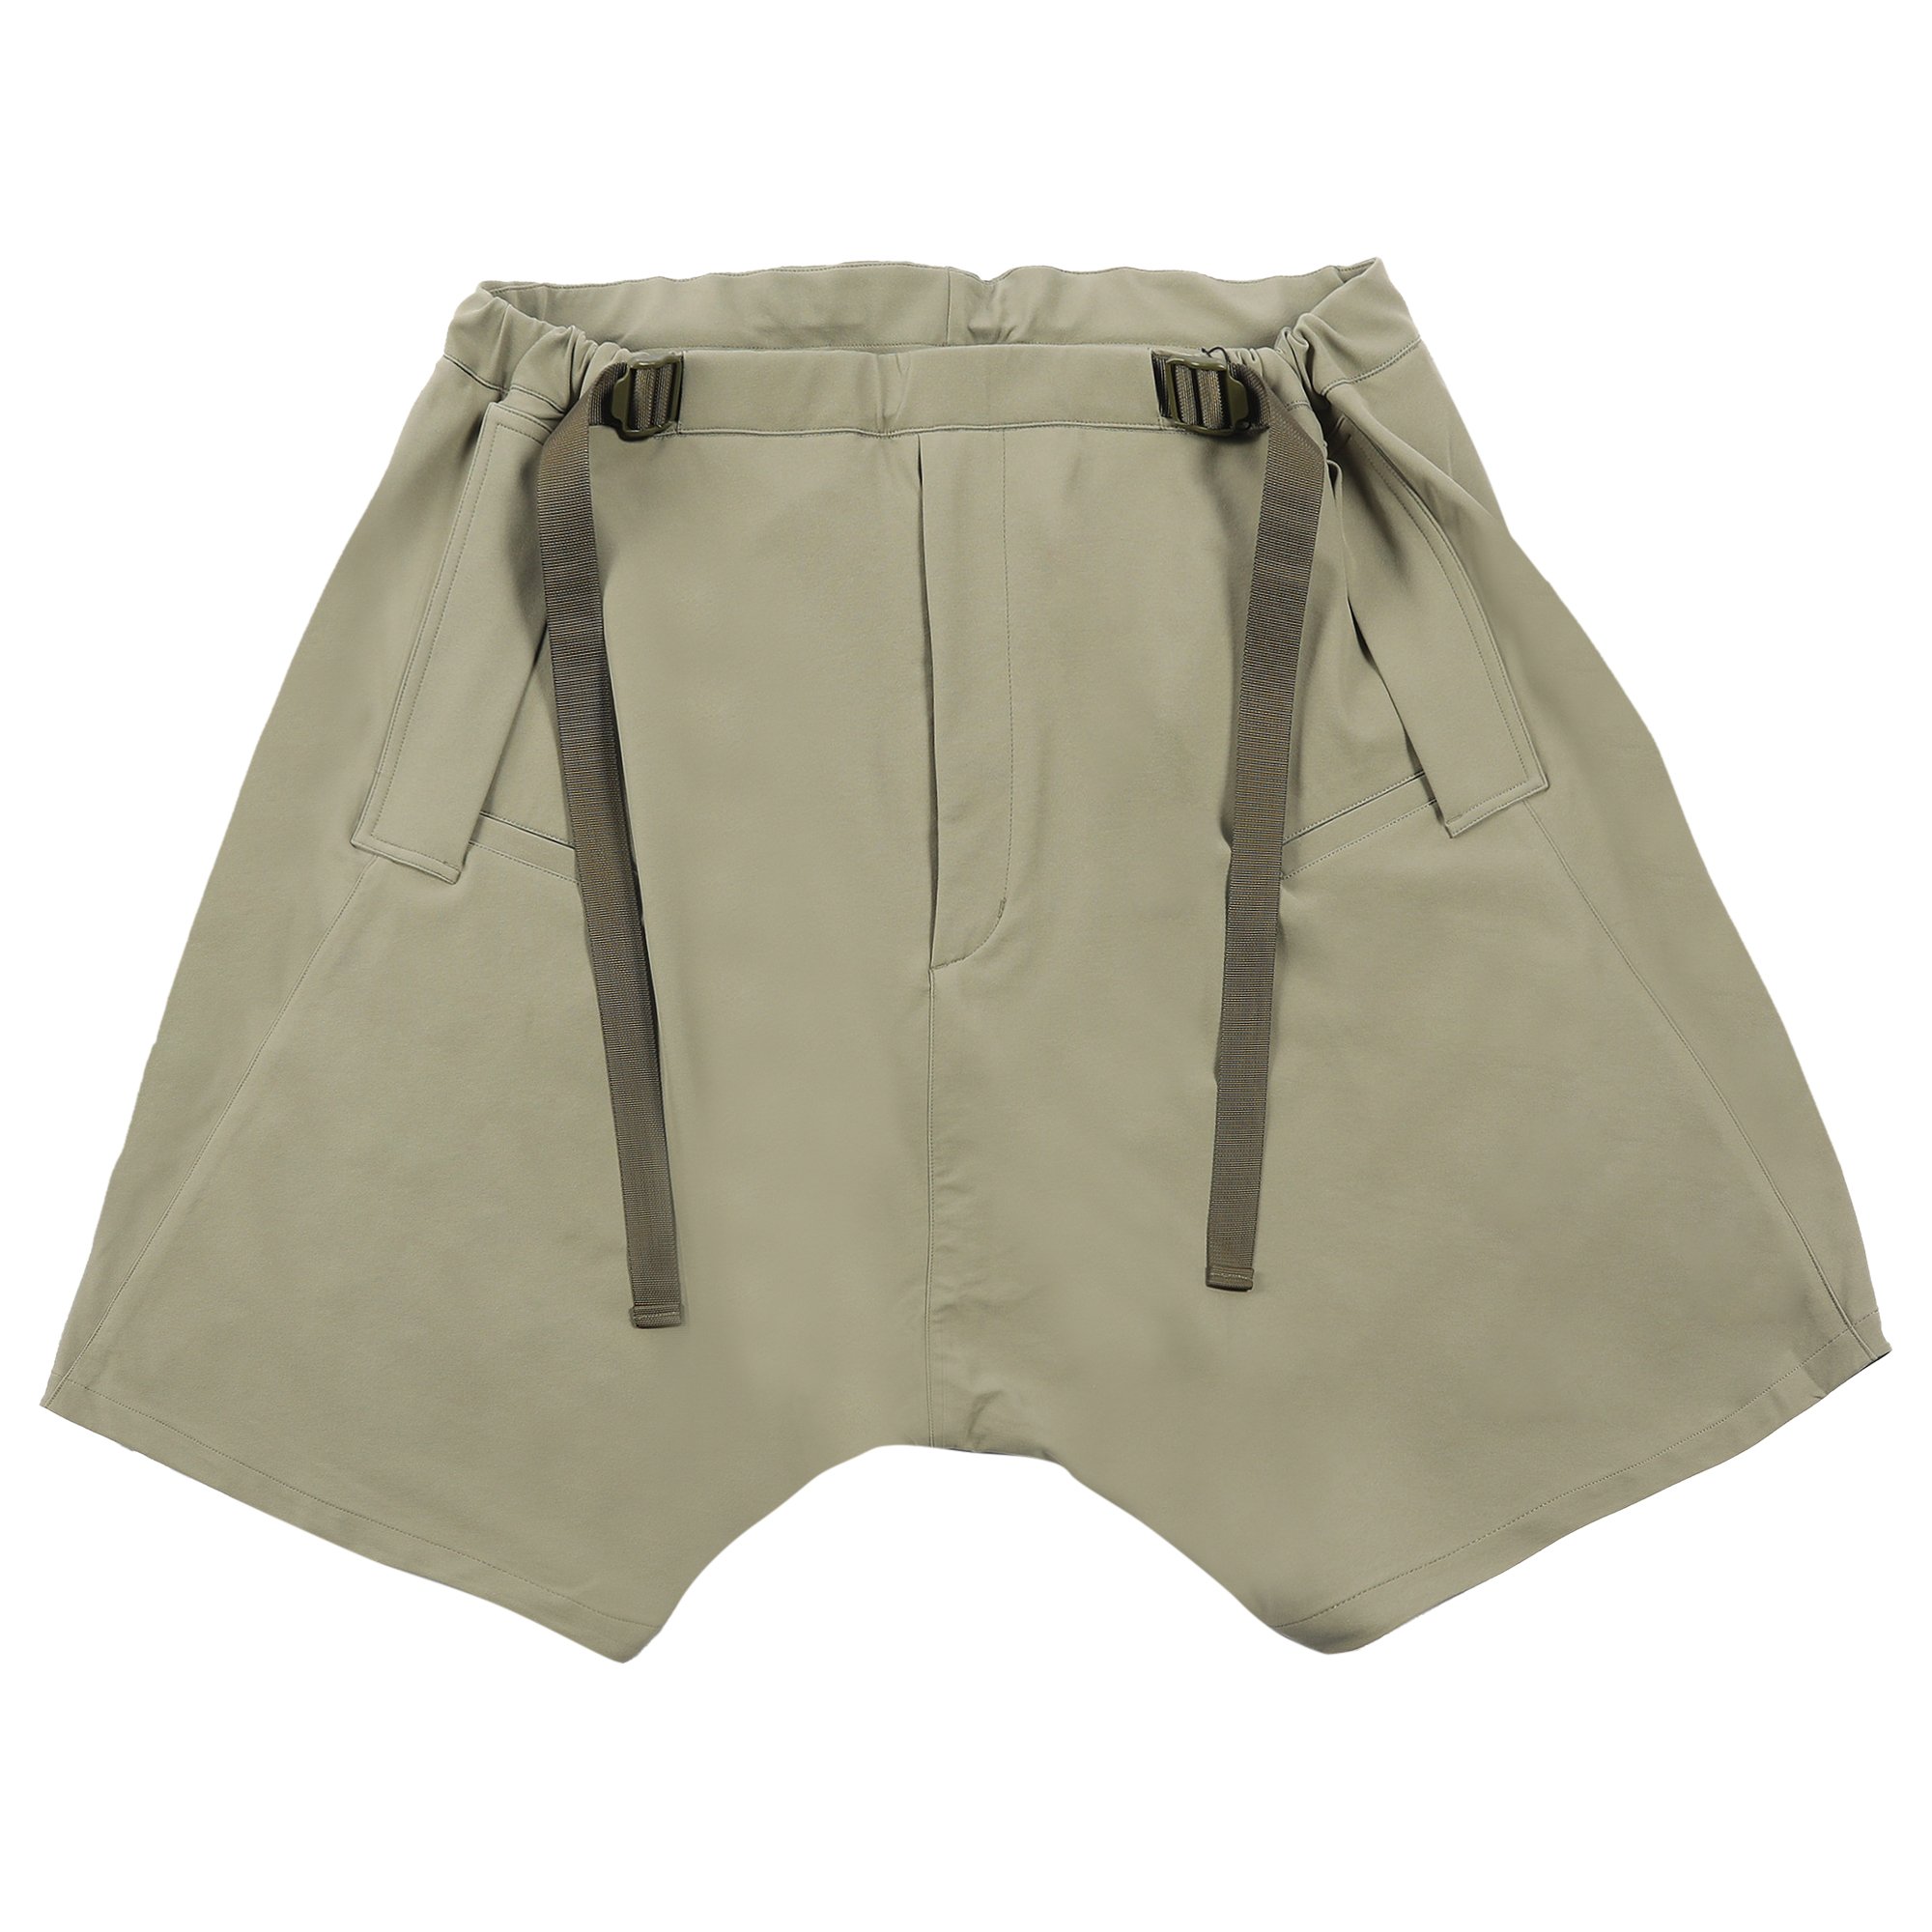 Buy Acronym Schoeller 3XDRY Dryskin Ultrawide Drawcord Short Pants 